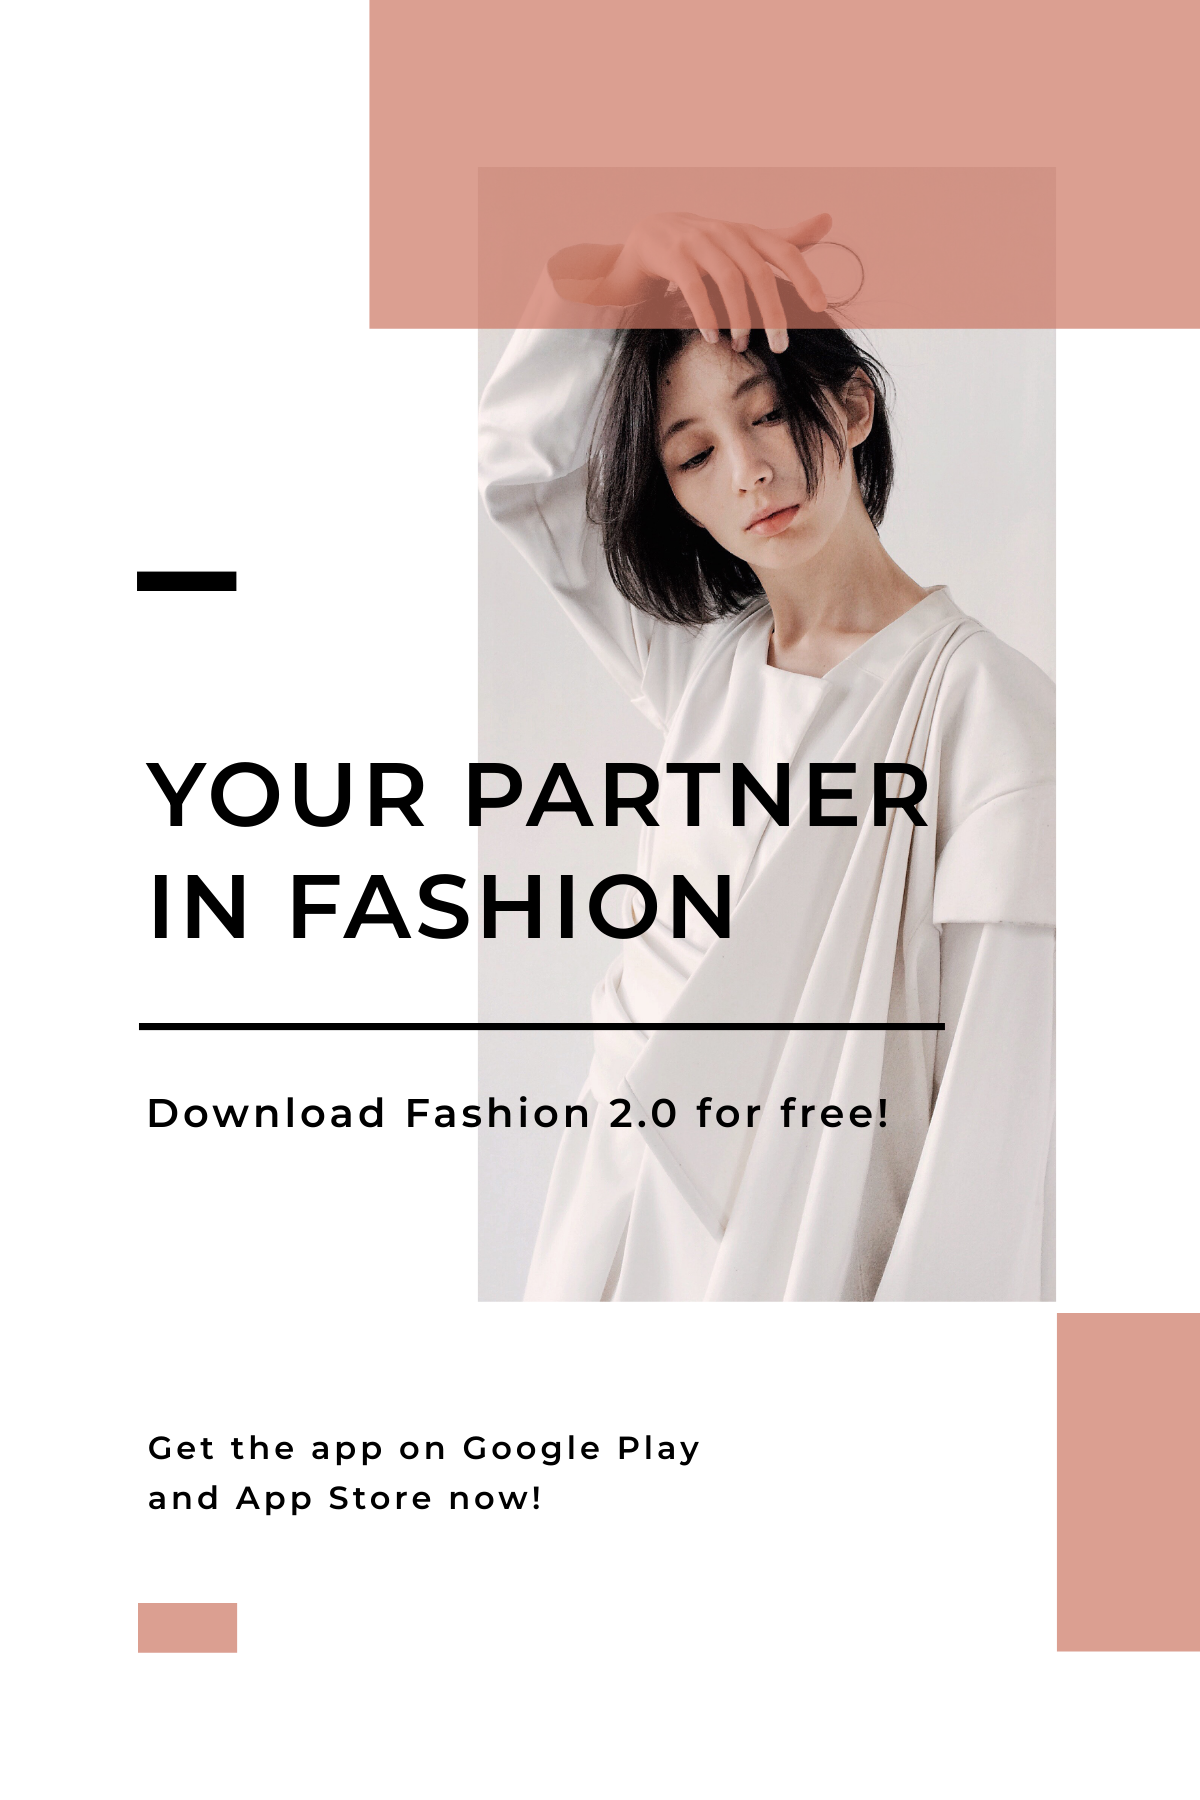 Free Minimalistic Fashion App Promotion Pinterest Pin Template